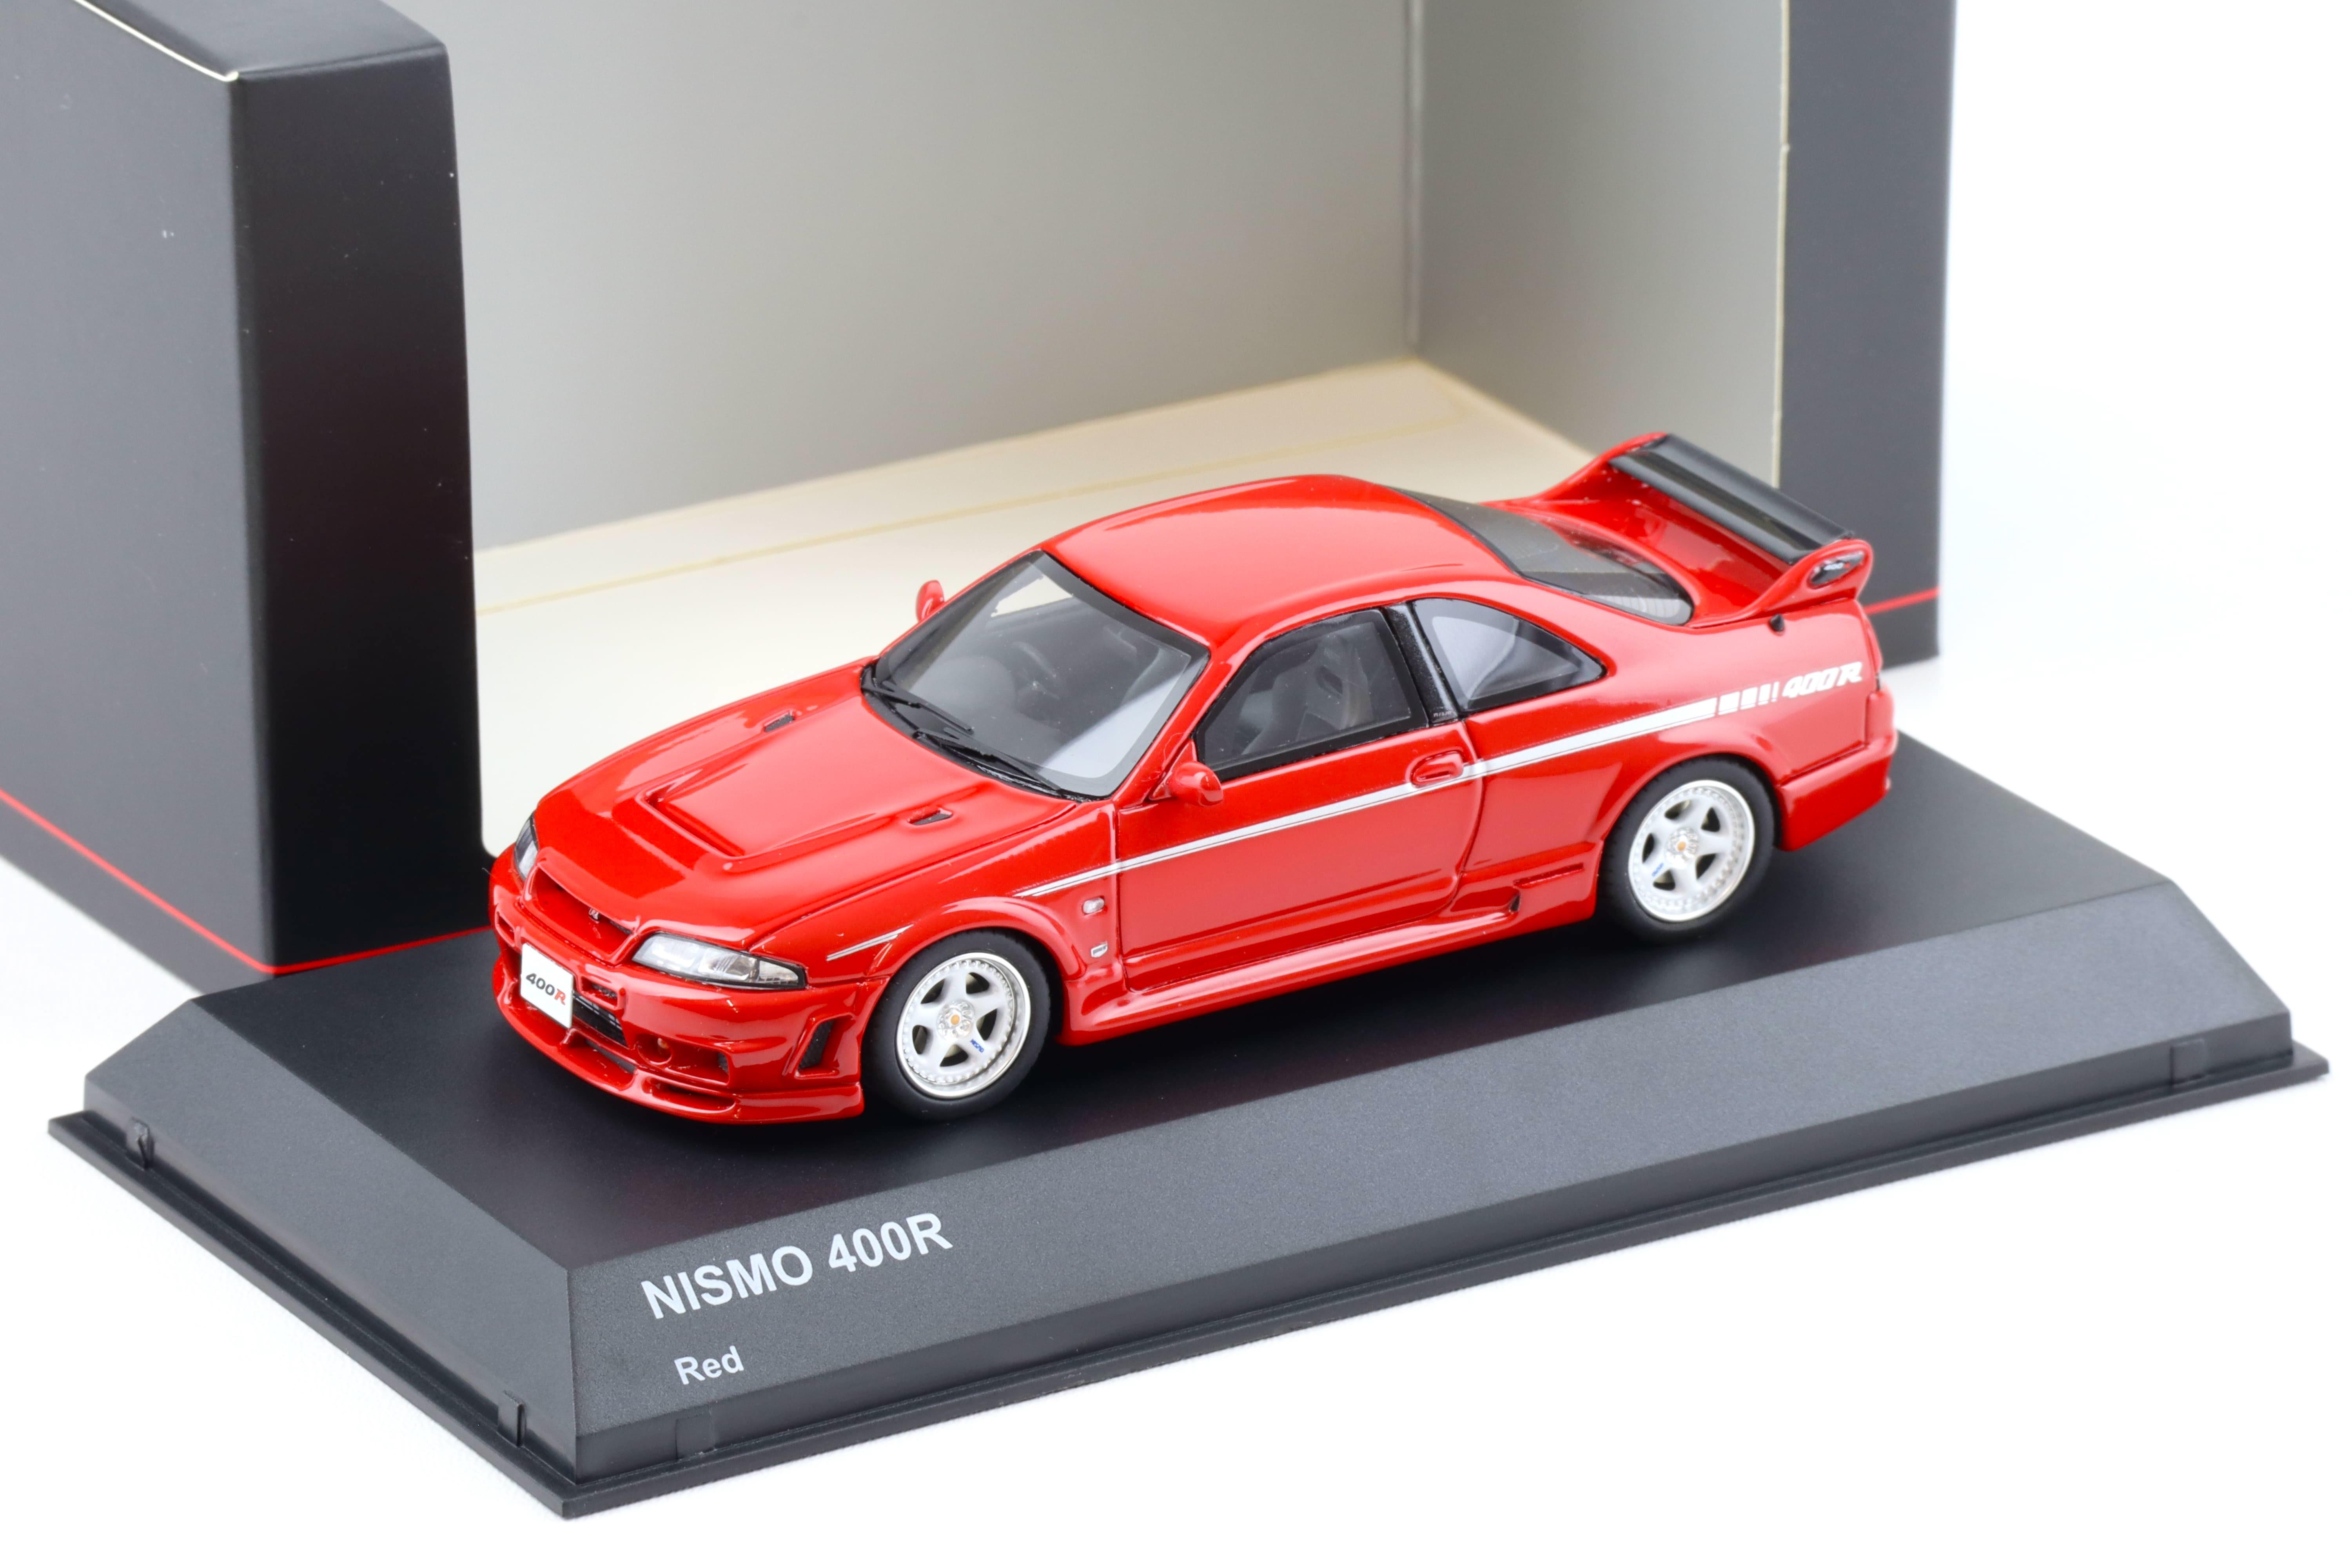 1:43 Kyosho Nissan Skyline R33 Nismo 400R Coupe 1997 red KSR43101R